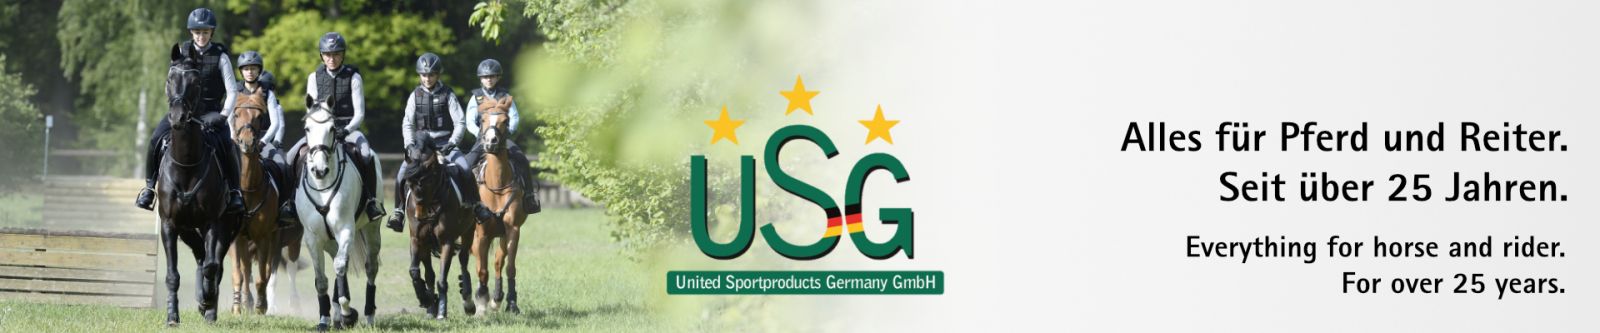 Das ist RID'UP - USG - United Sportproducts Germany GmbH